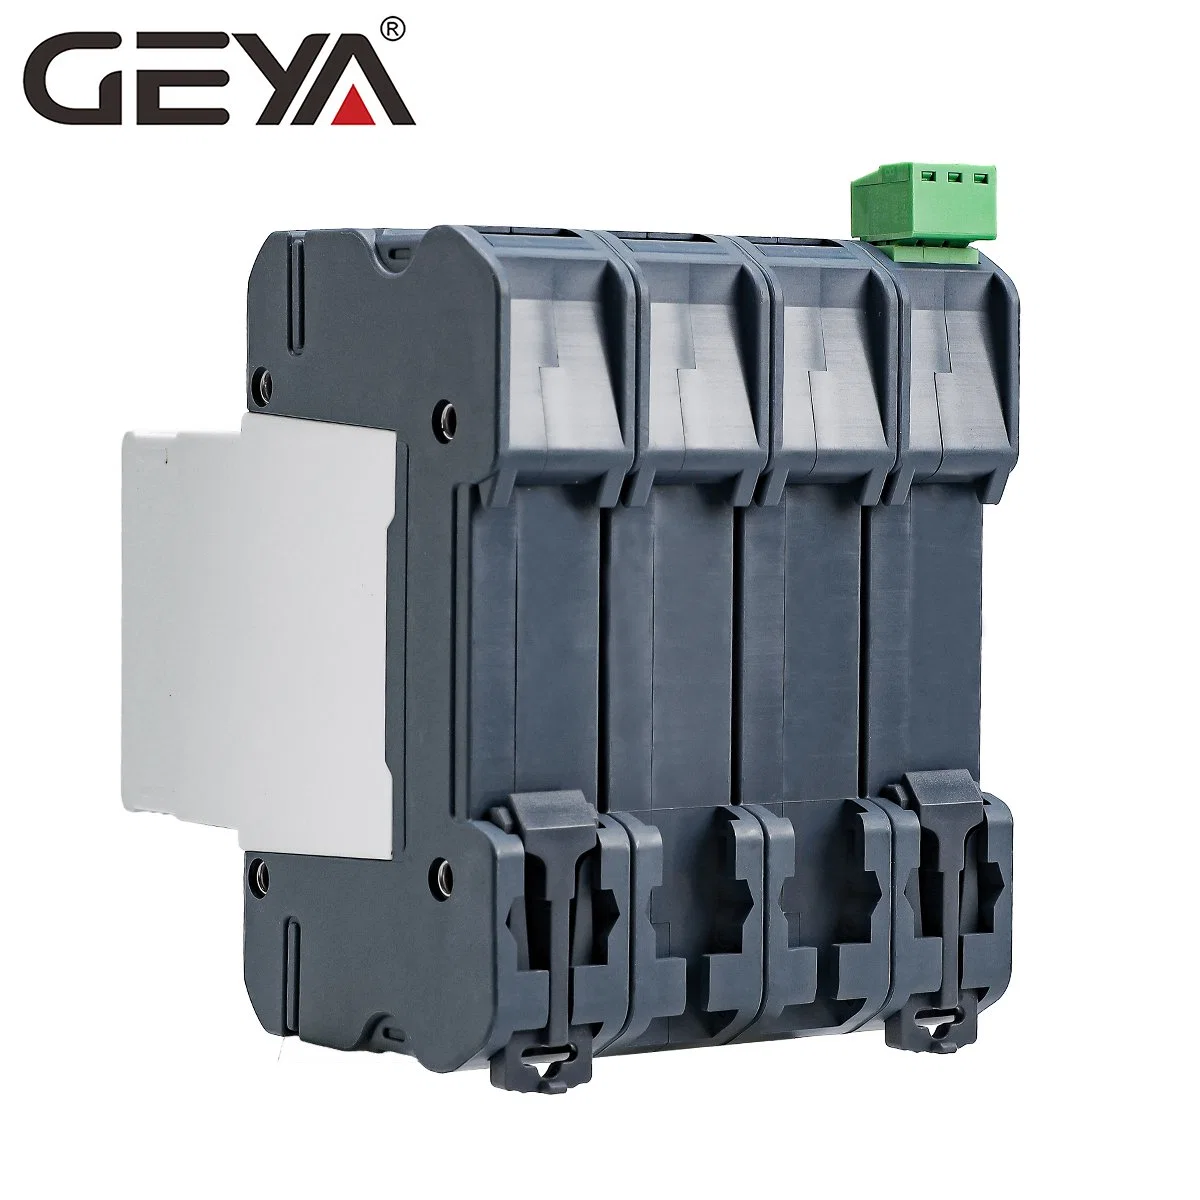 Surgearrest Price Geya T1+T2 Electrical Panel Best Surge Protector 2021